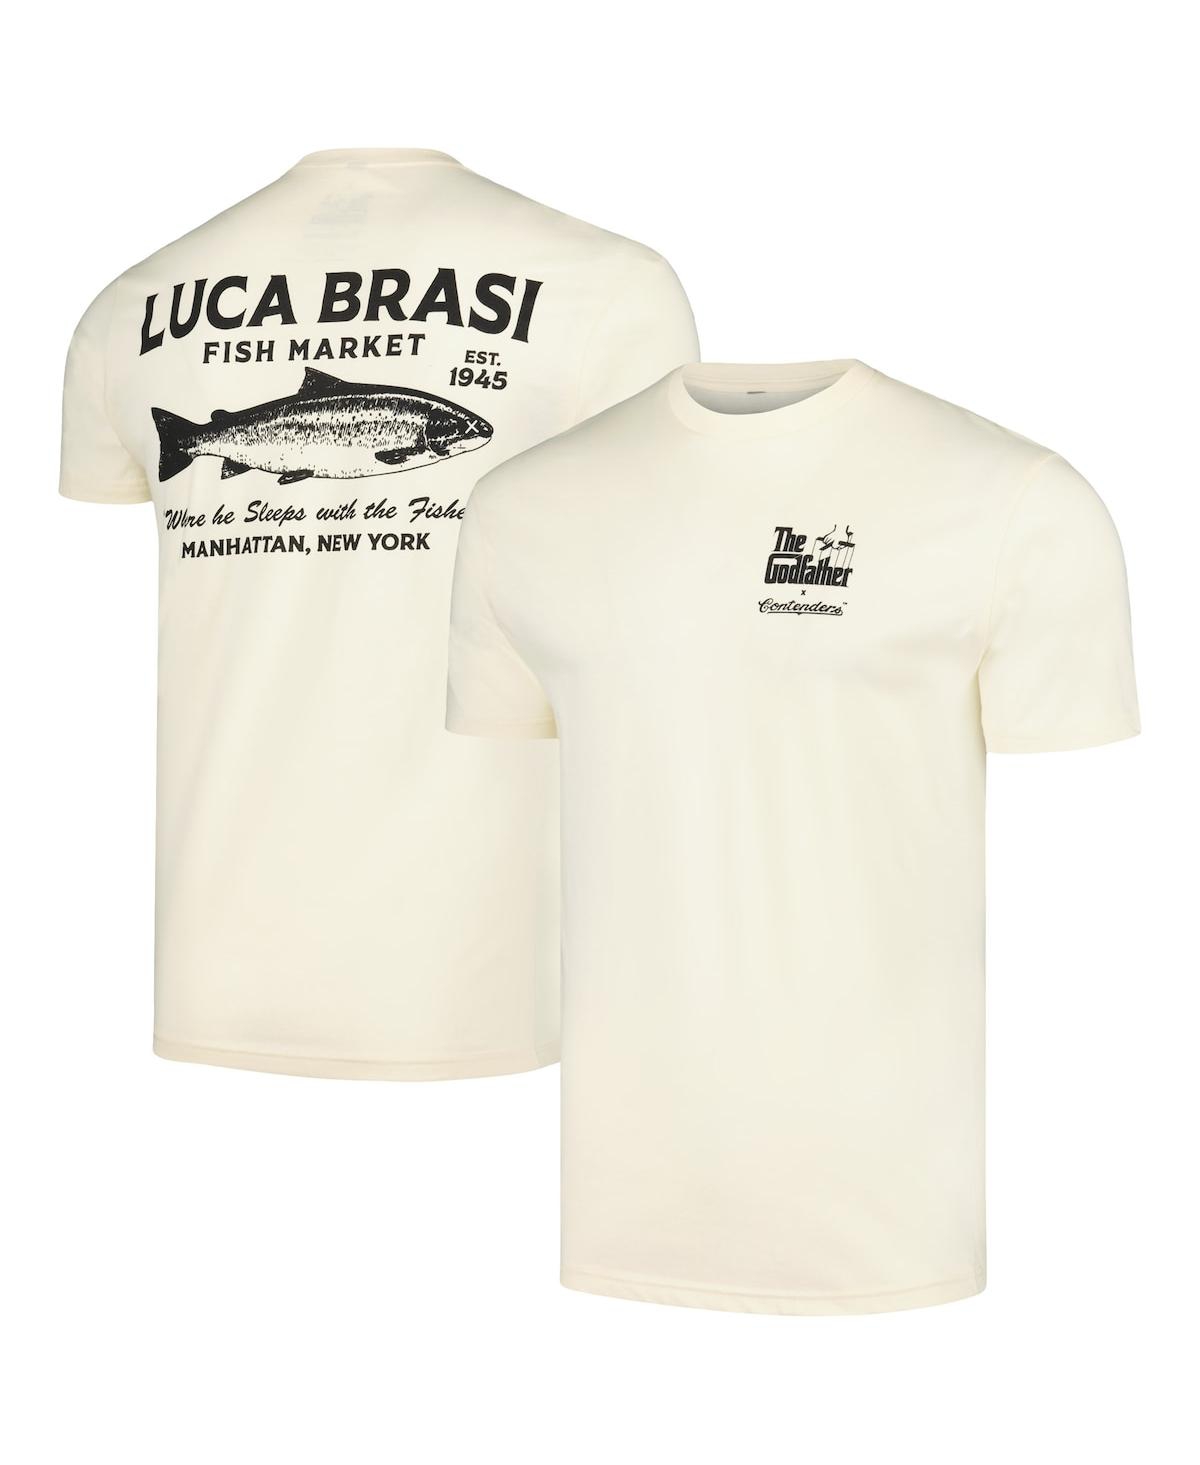 Shop Contenders Clothing Men's  Natural The Godfather Luca Brasi Fish Market T-shirt